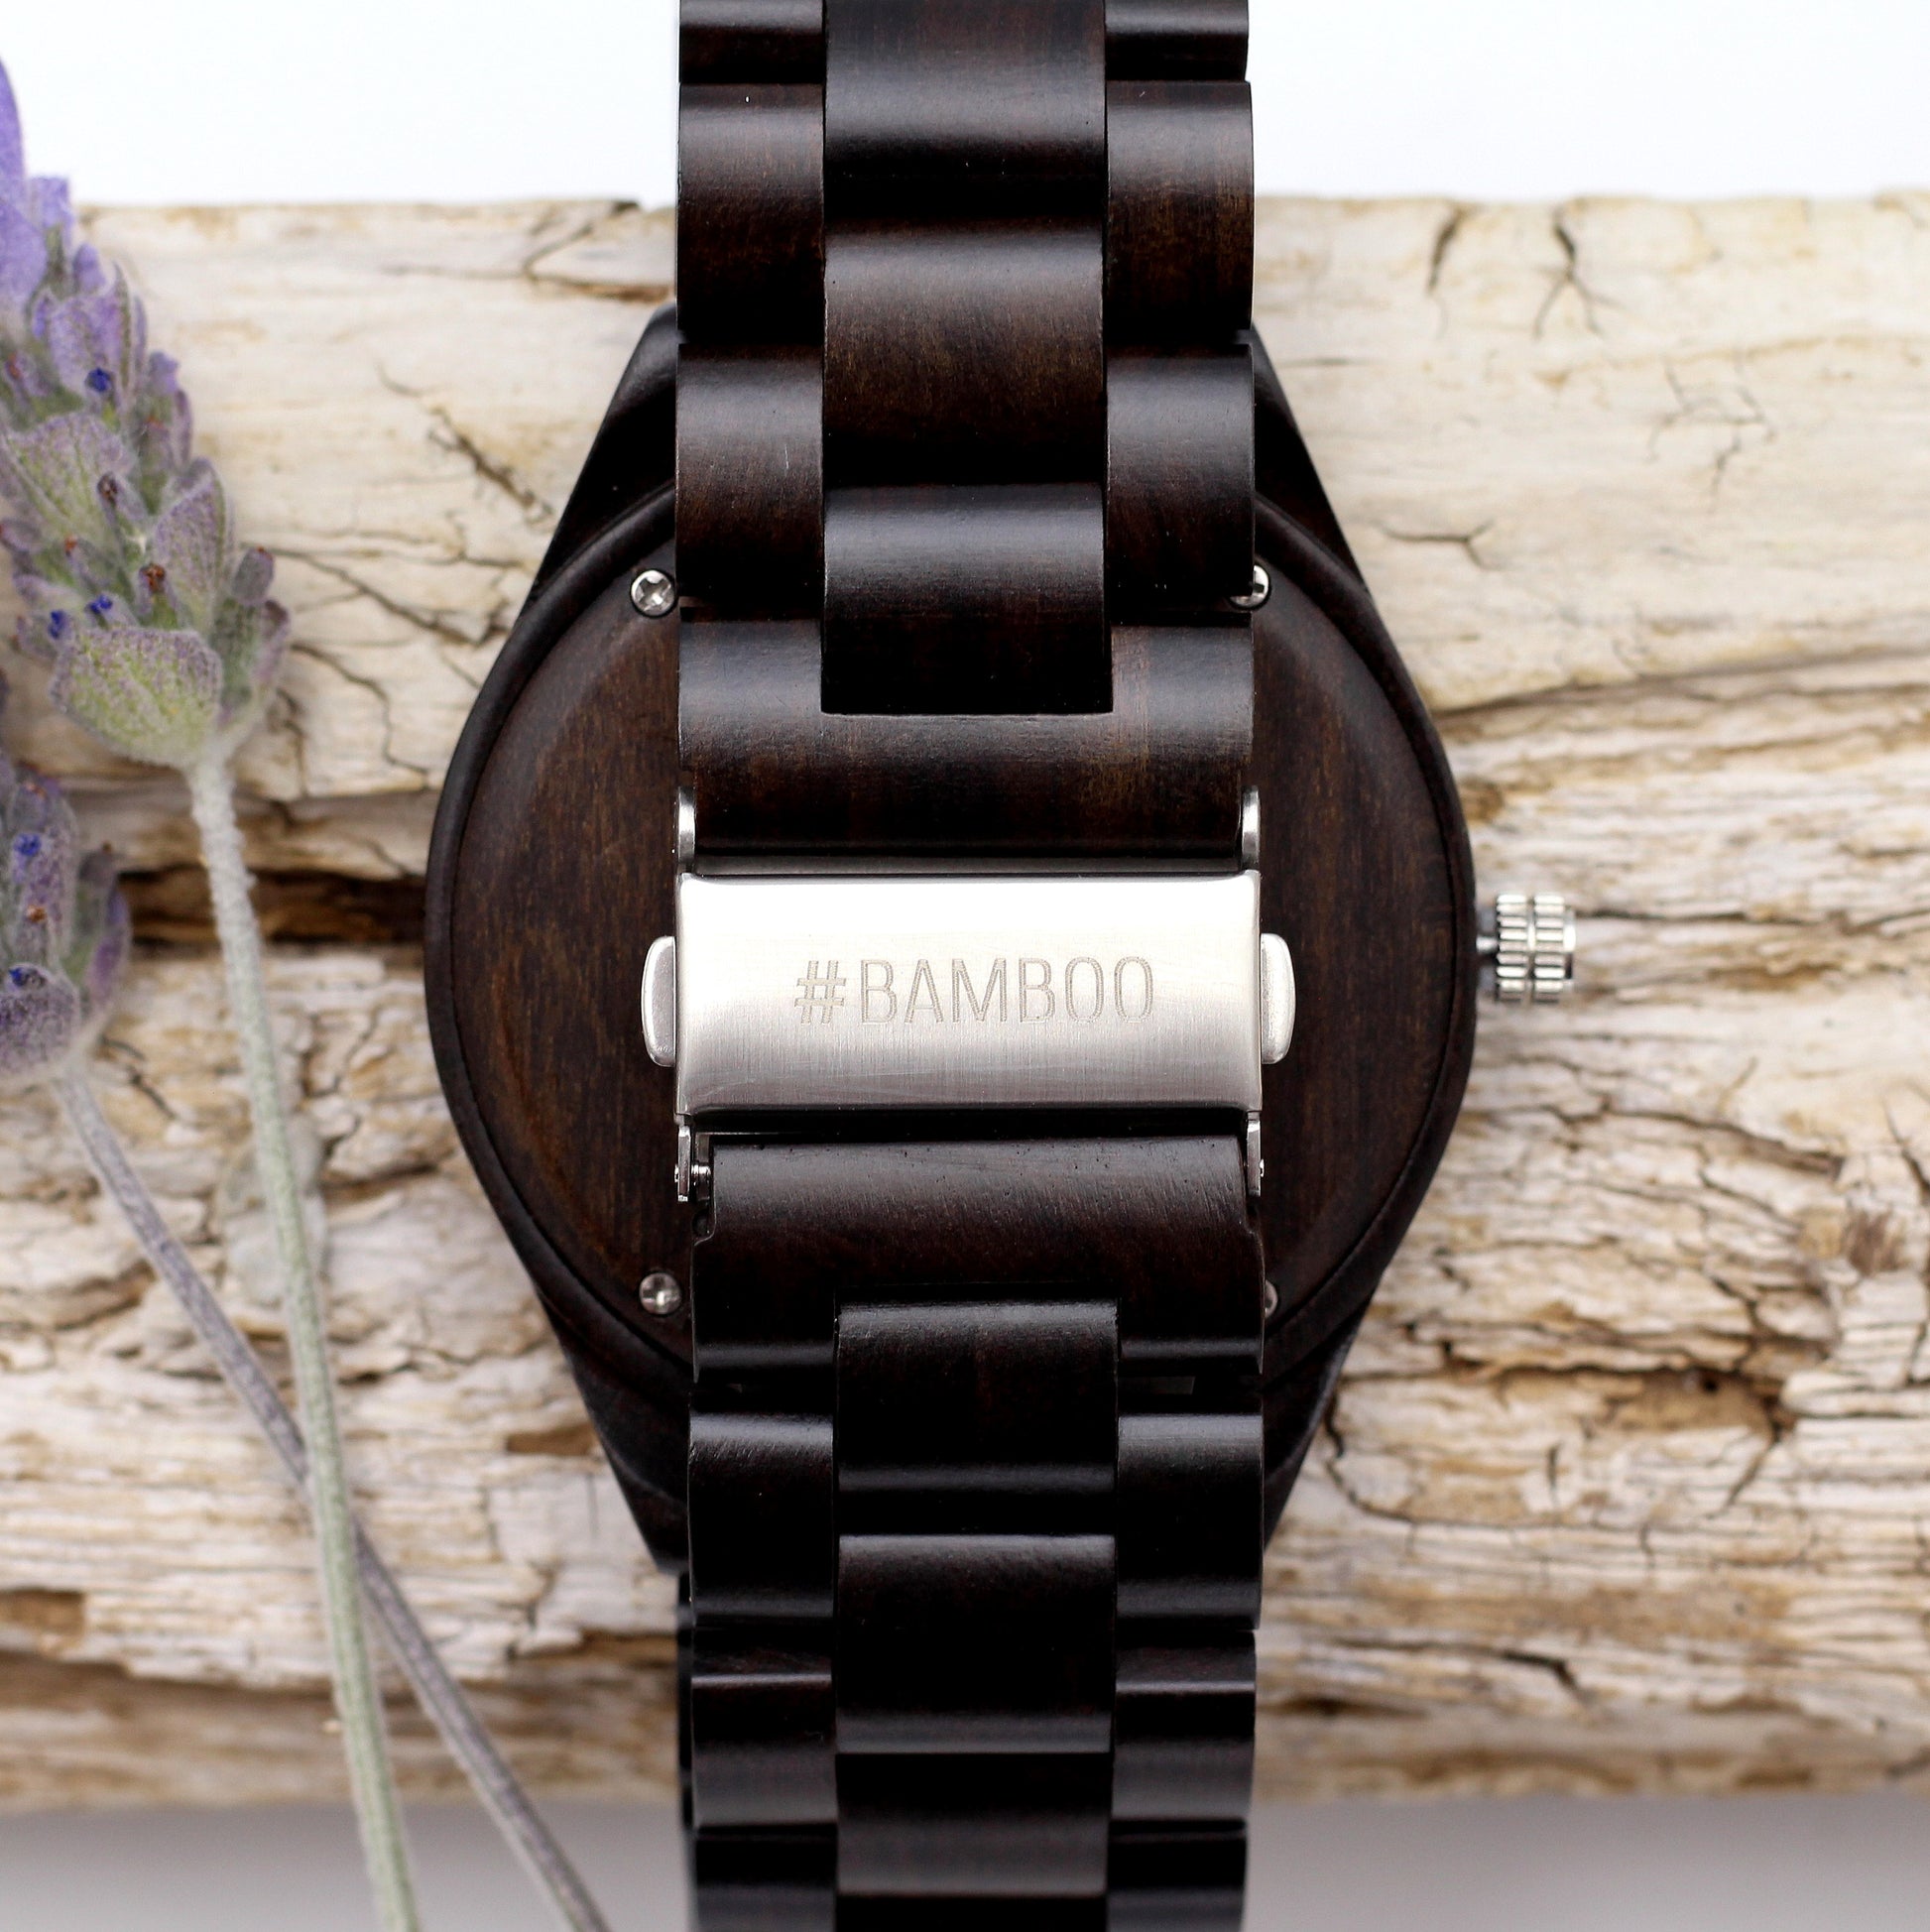 MANWOOD NOX Men's Ebony Wooden Watch with Wood Strap - Hashtag Bamboo